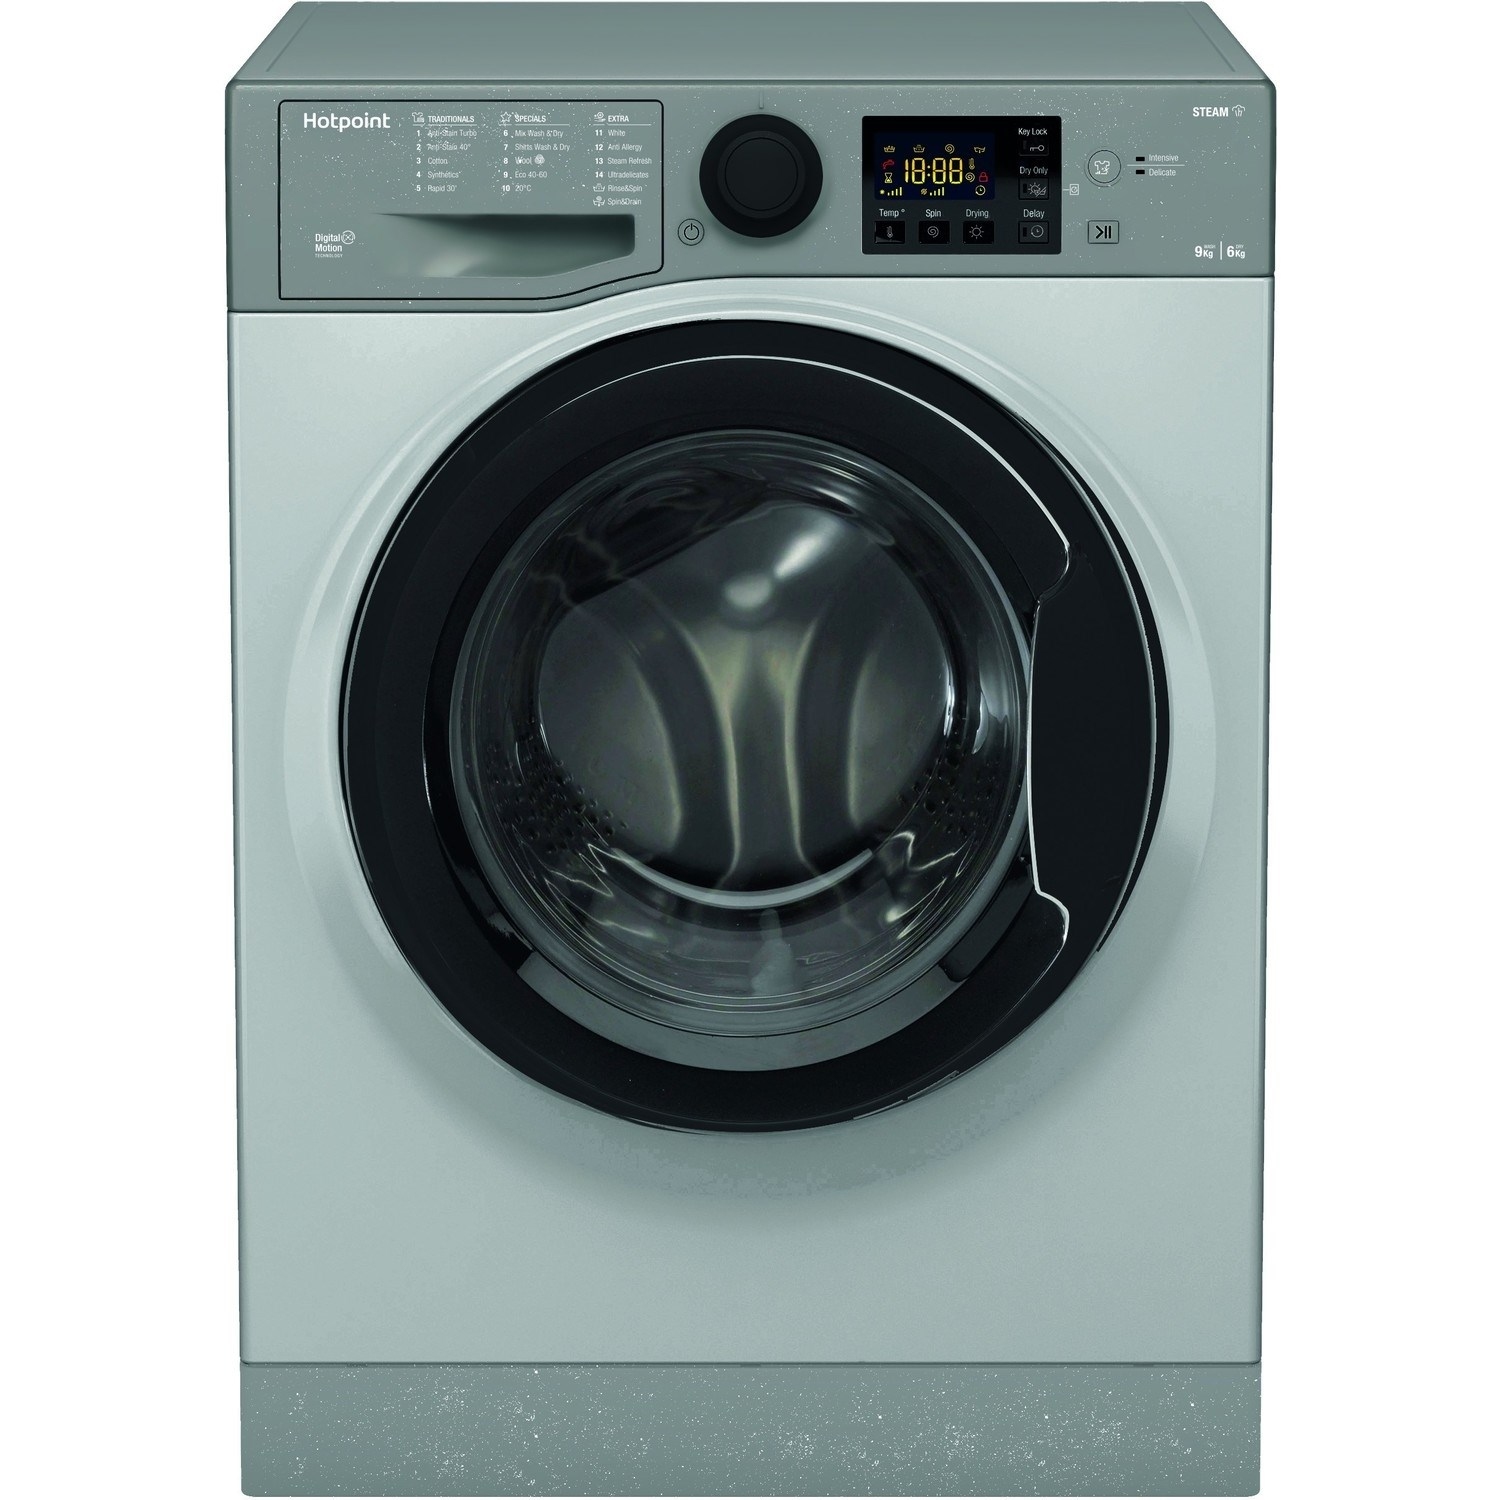 Hotpoint 9Kg / 6Kg Washer Dryer with 1400 rpm - Graphite - 0